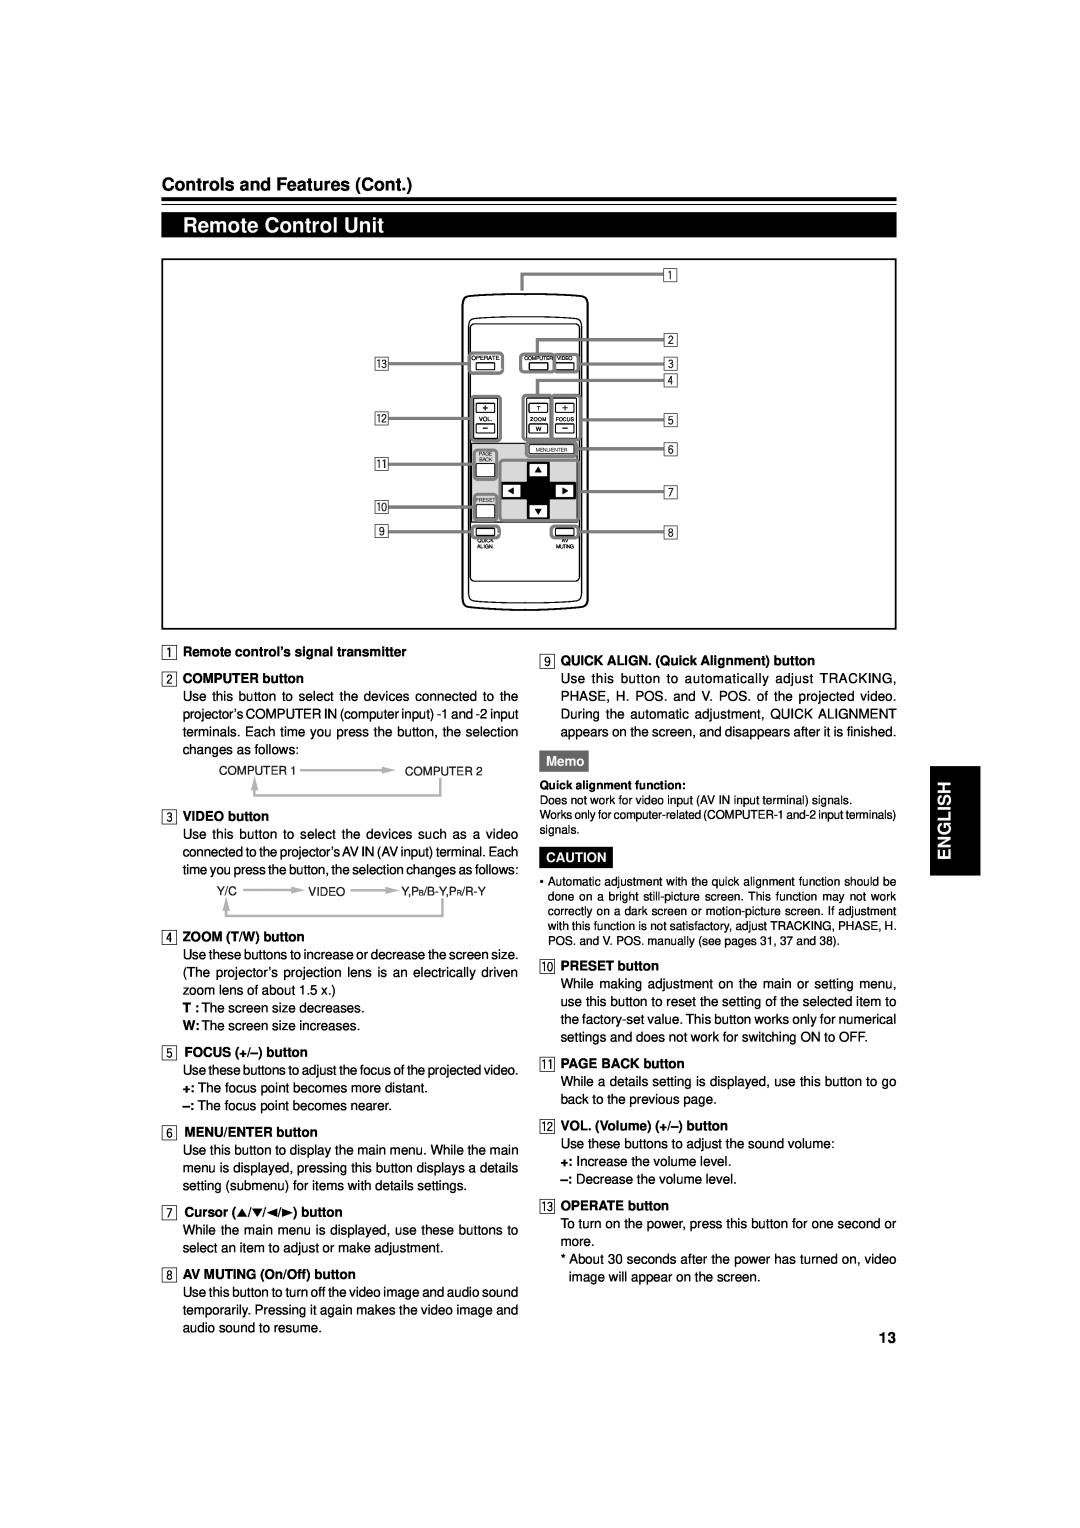 JVC DLA-G11U manual Remote Control Unit, Controls and Features Cont, English, w q p, VIDEO button, ZOOM T/W button, Memo 